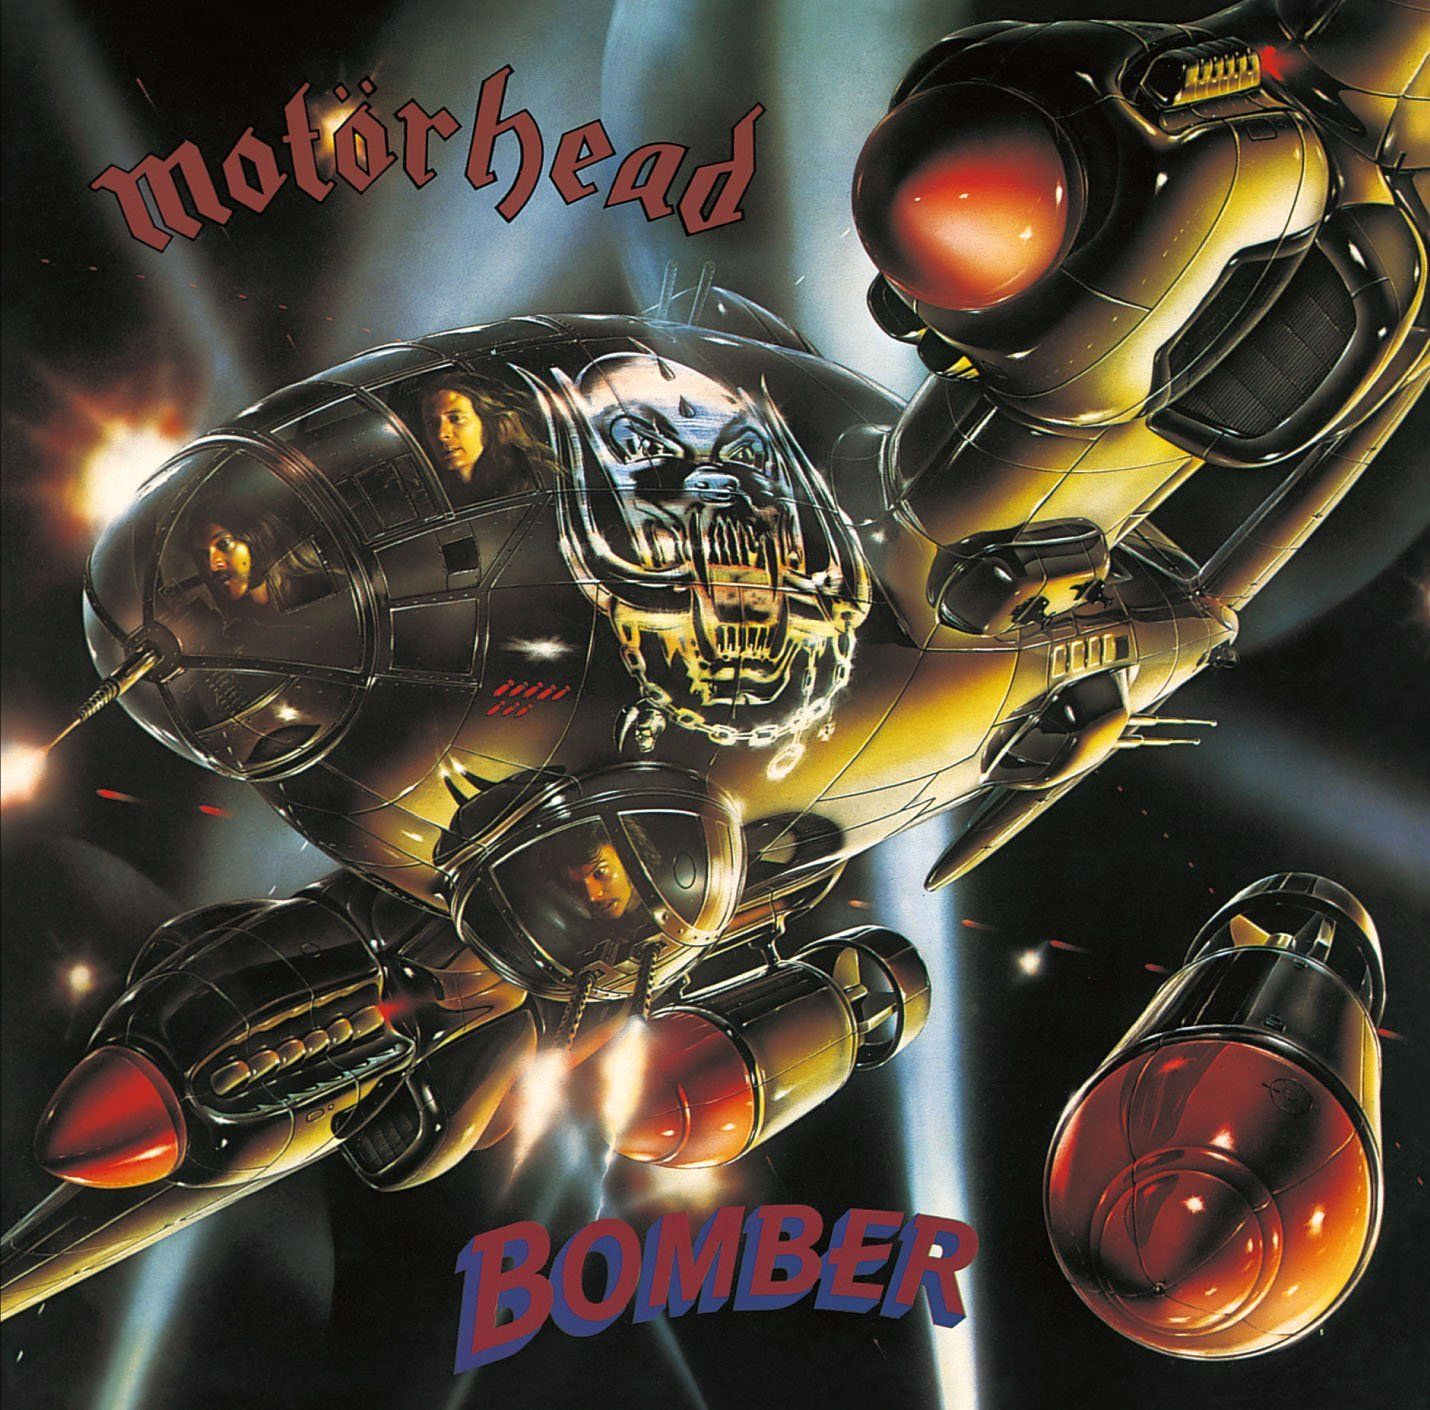 Motörhead - Bomber LP